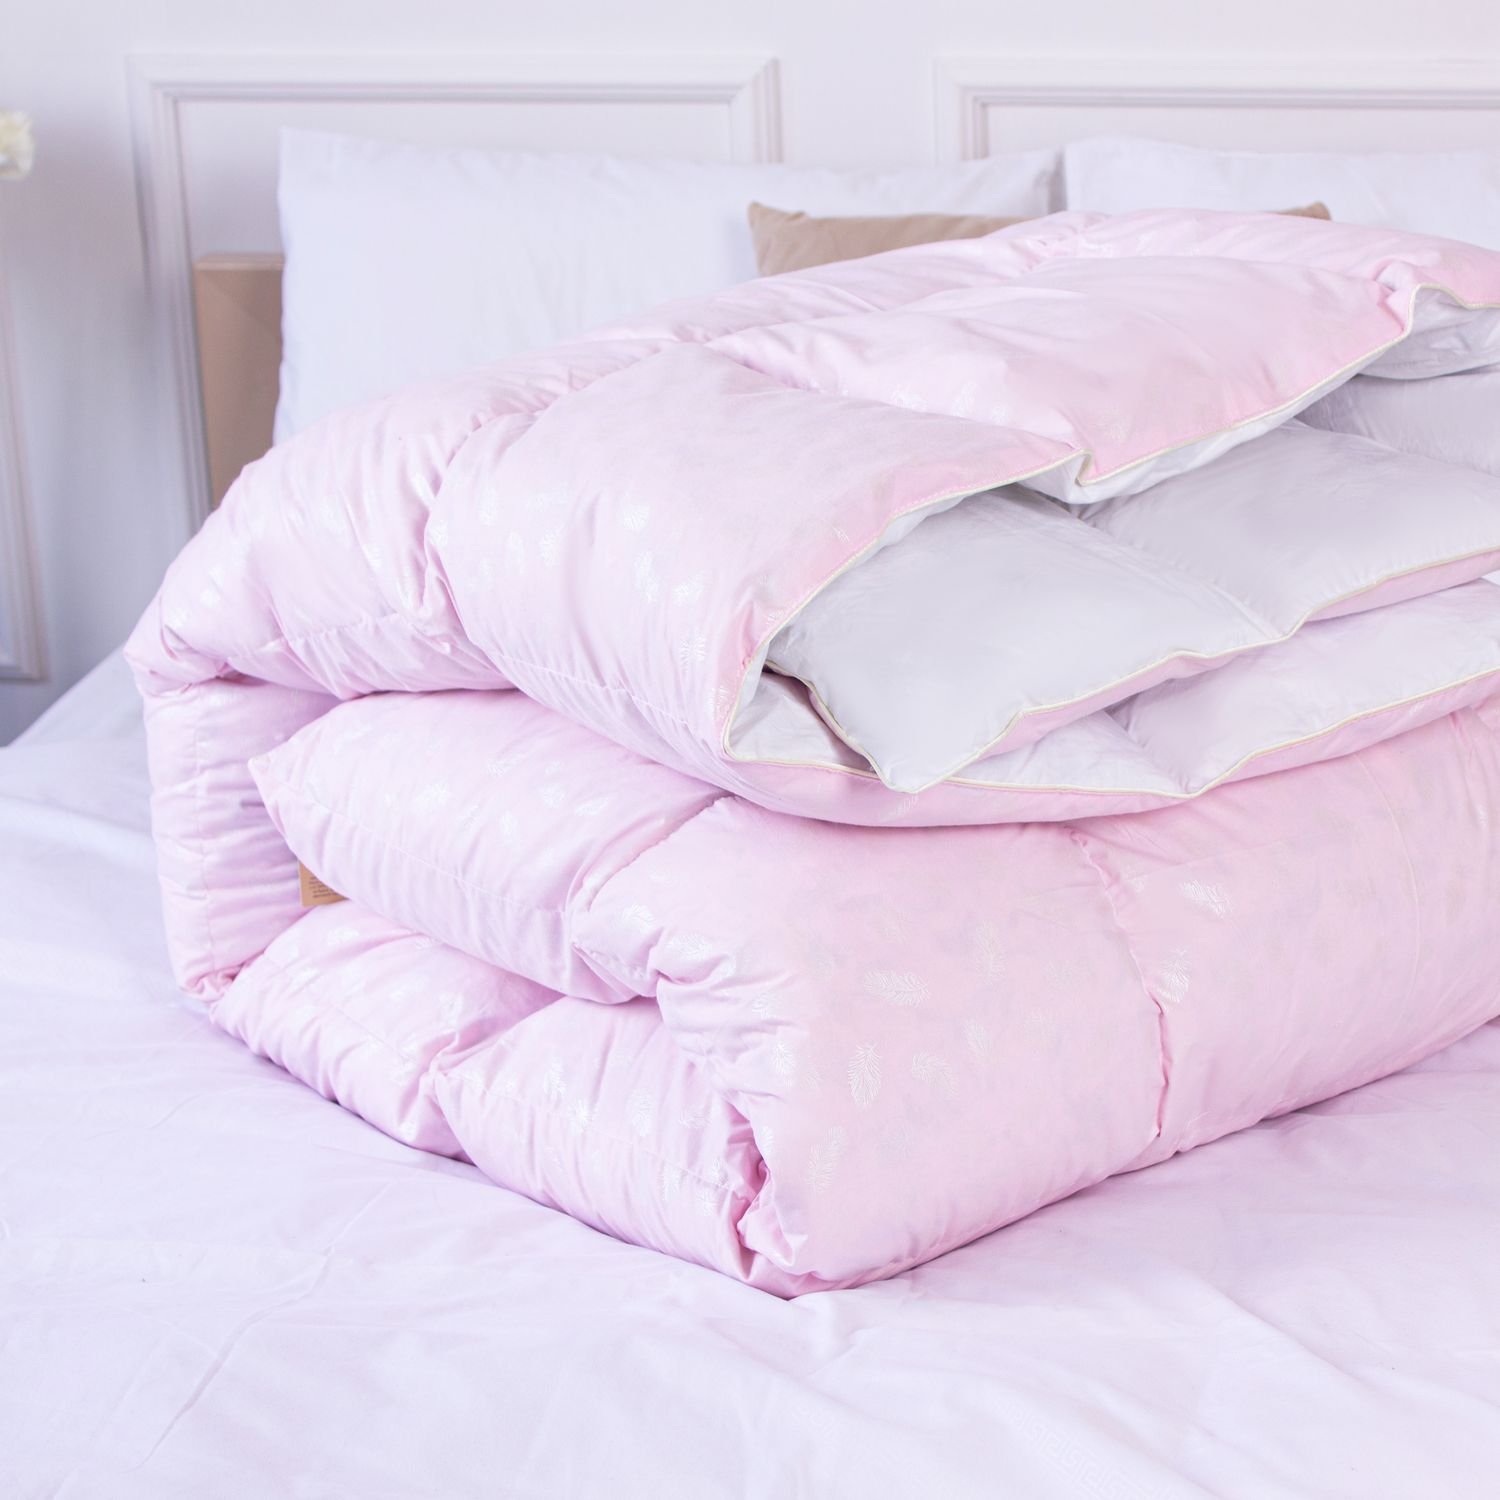 Одеяло пуховое MirSon Karmen №1829 Bio-Pink, 90% пух, евростандарт, 220x200, розовое (2200003012965) - фото 3